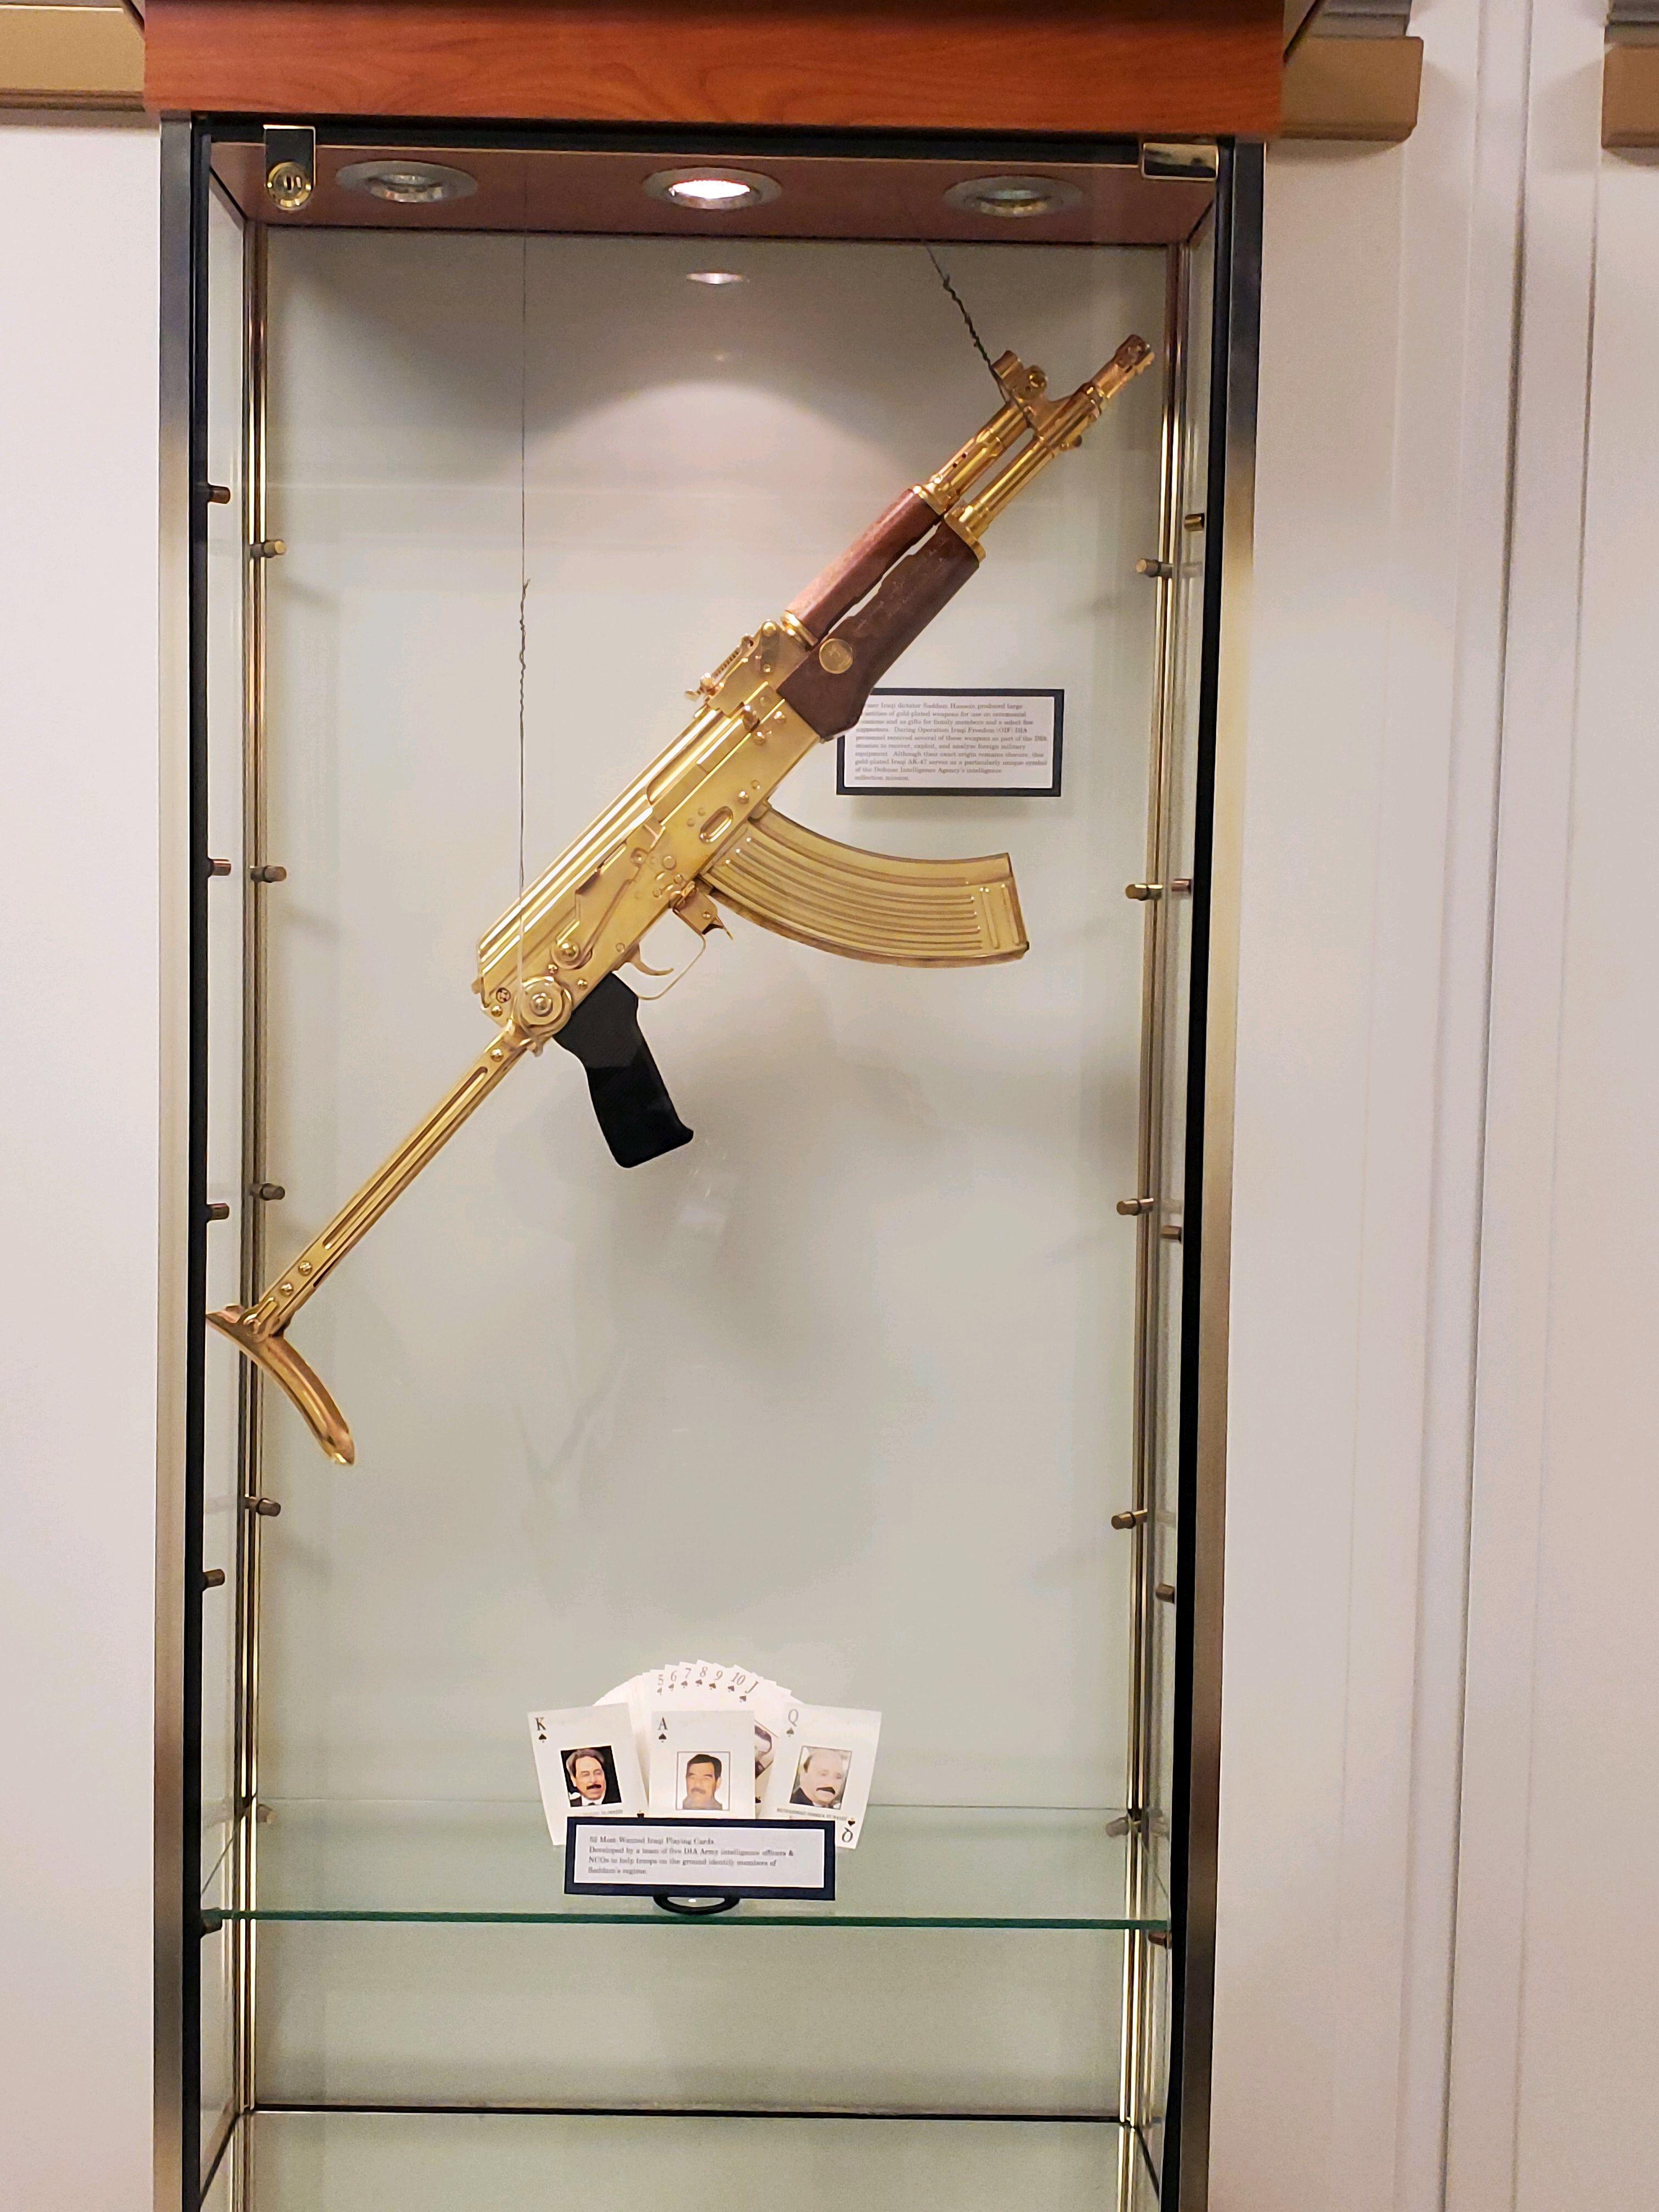 Saddam Hussein's gold AK47, allegedly.